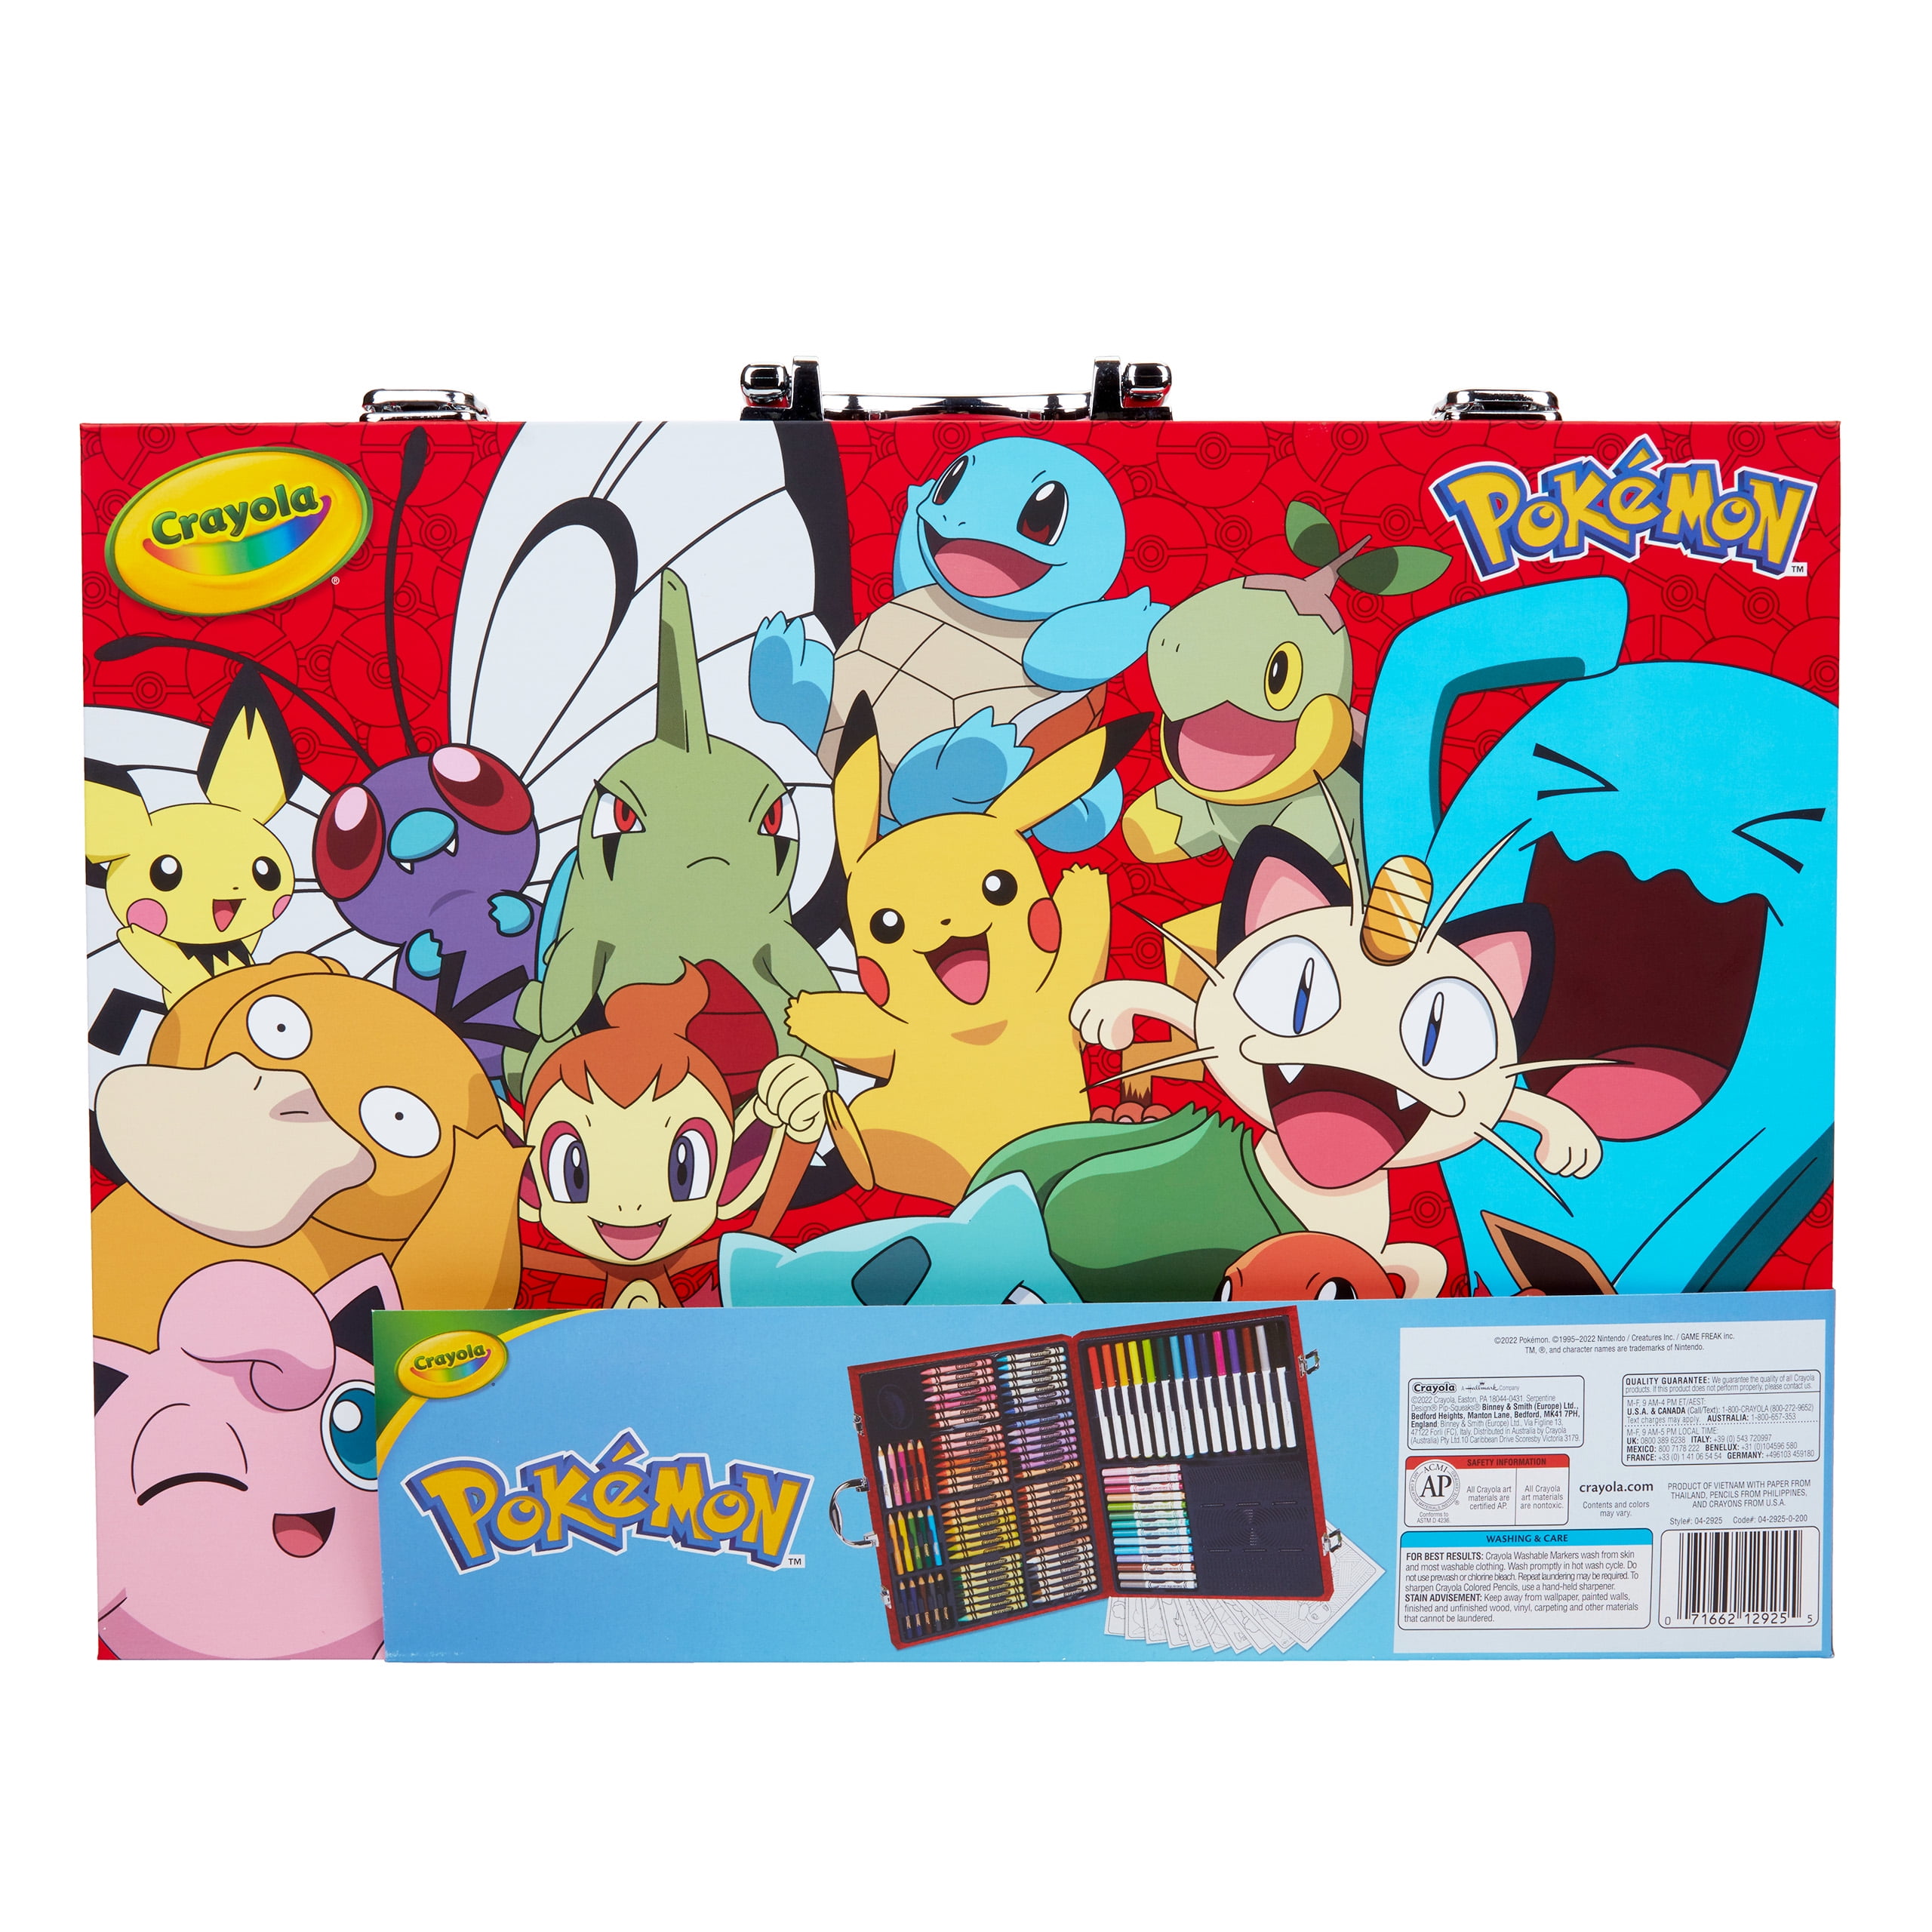 Crayola Pokémon Imagination Art Coloring Set, 115 Pcs, Pokemon Toys, Arts &  Crafts, Beginner Child